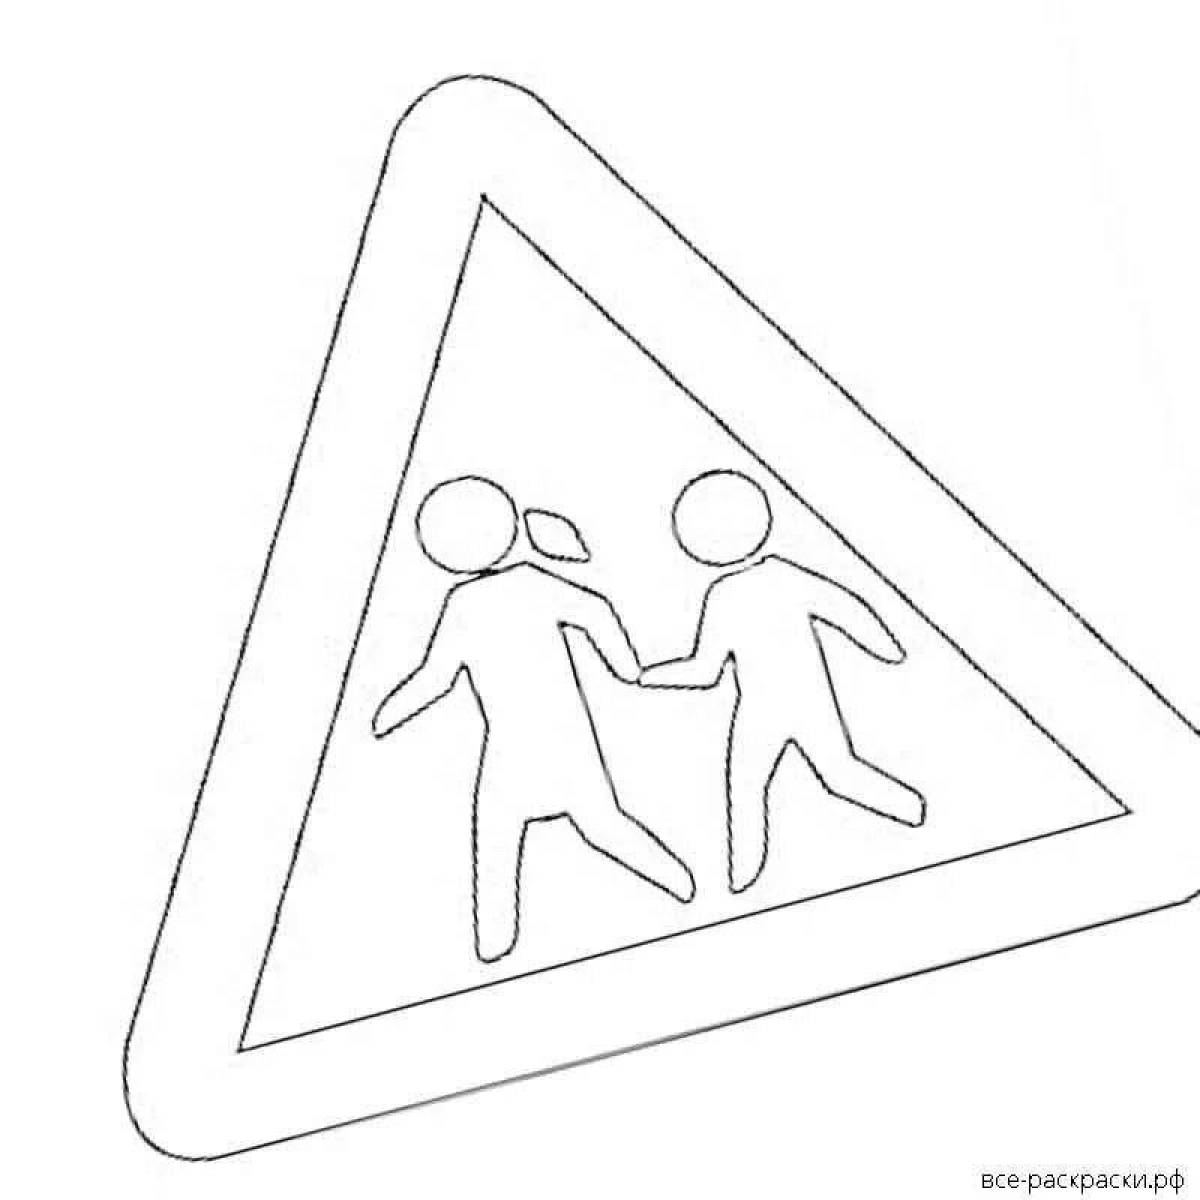 Sign caution children road template #3